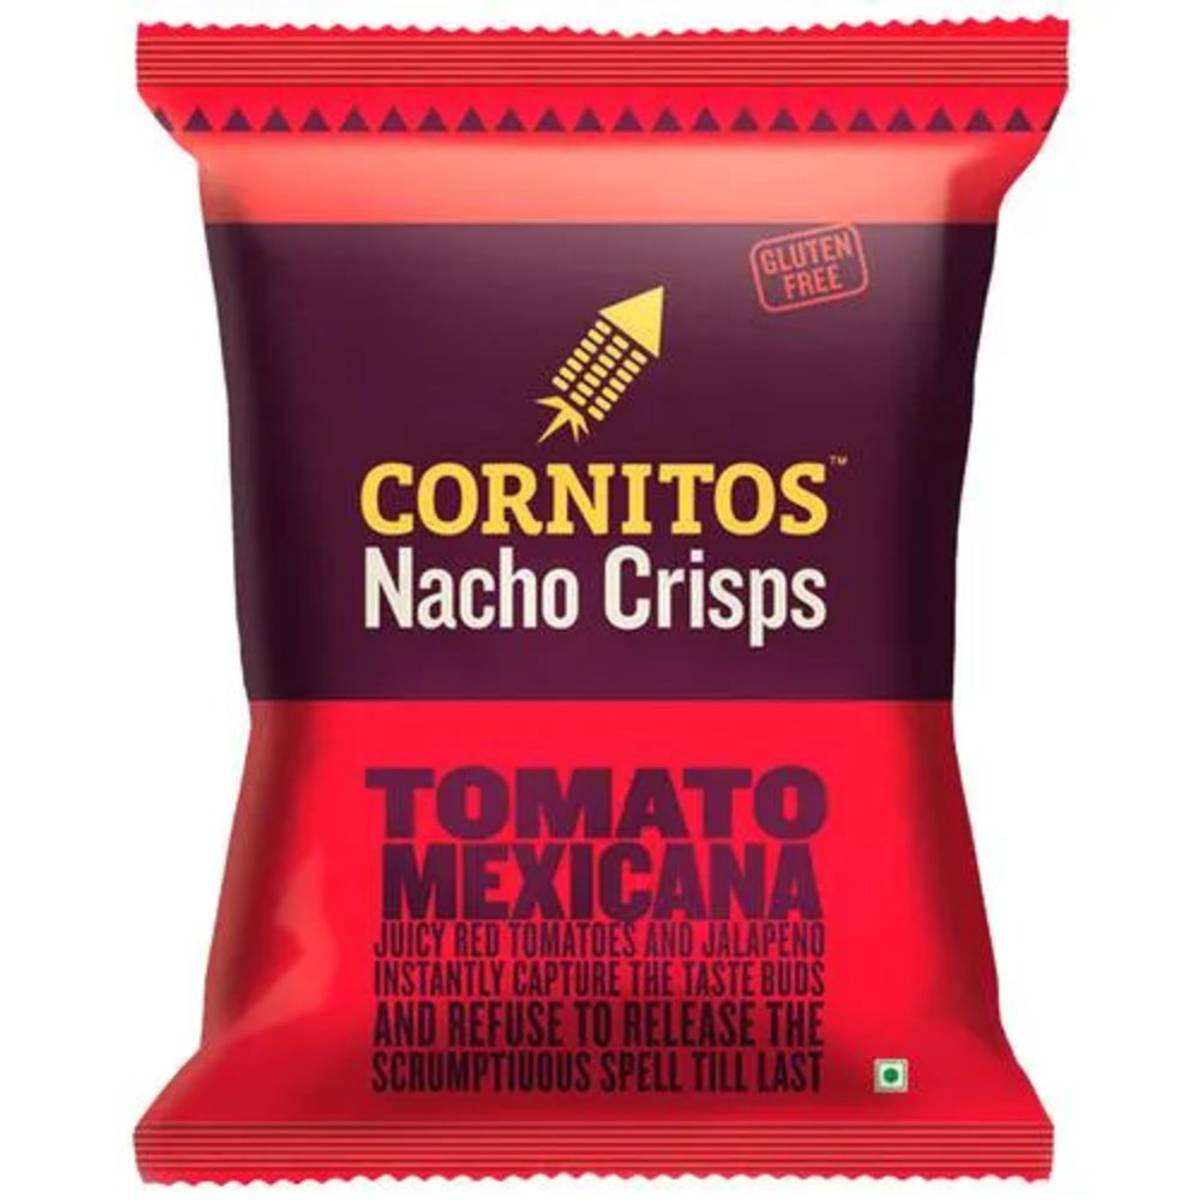 Cornitos Nacho Crisps-Tomato Mexicana 20g